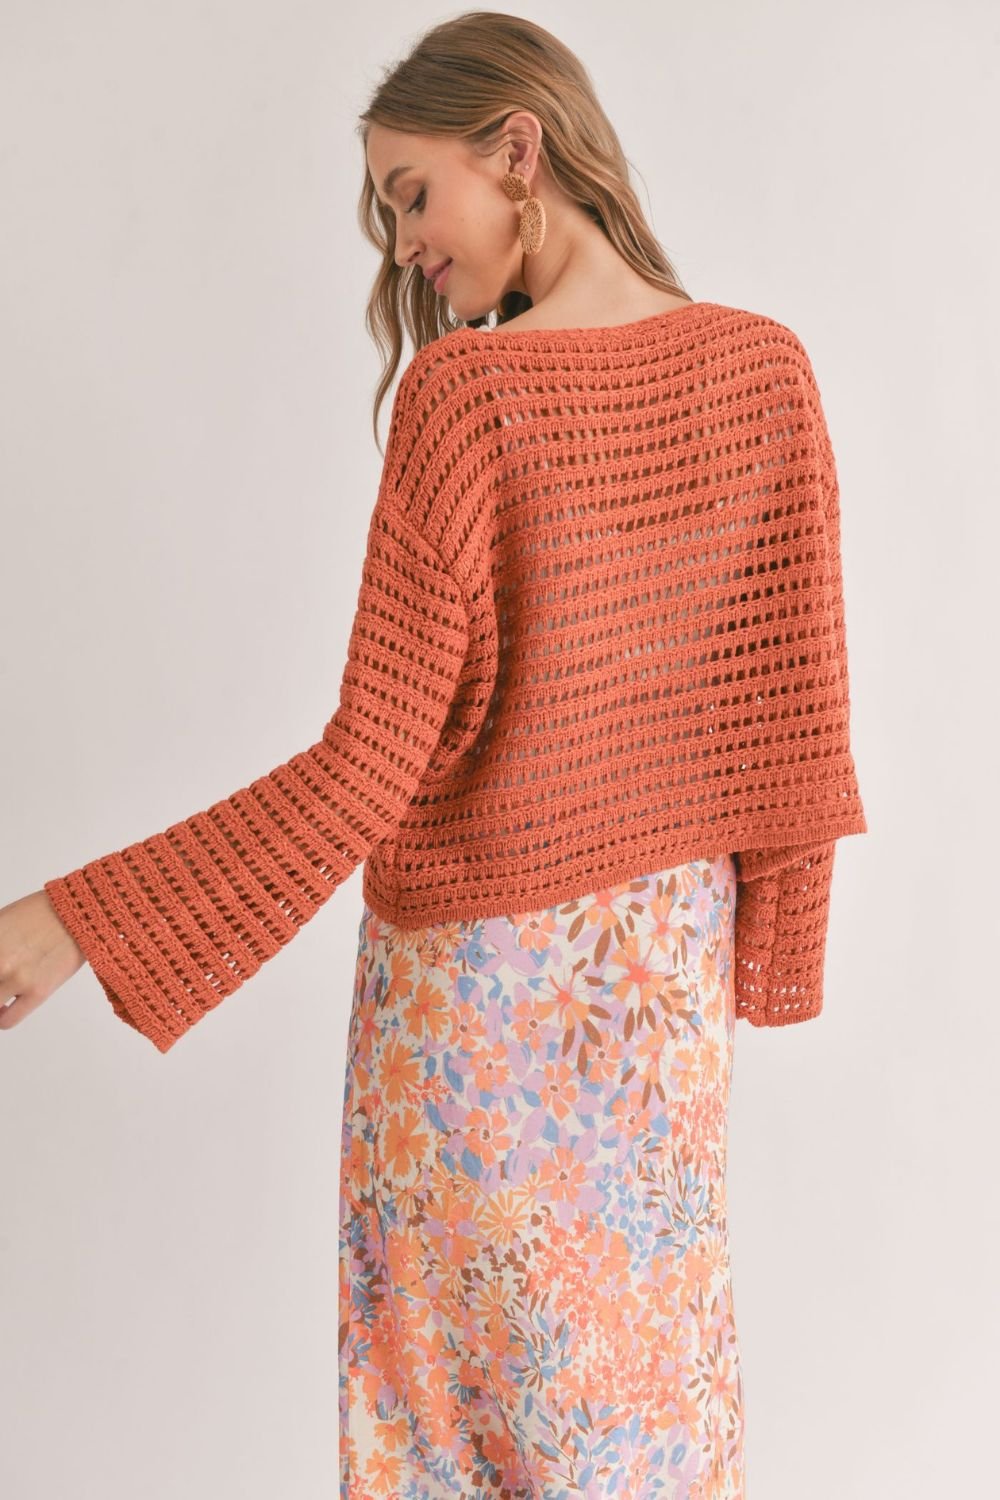 Women's Open Knit Crochet Sweater Top | Rust - Women's Shirts & Tops - Blooming Daily